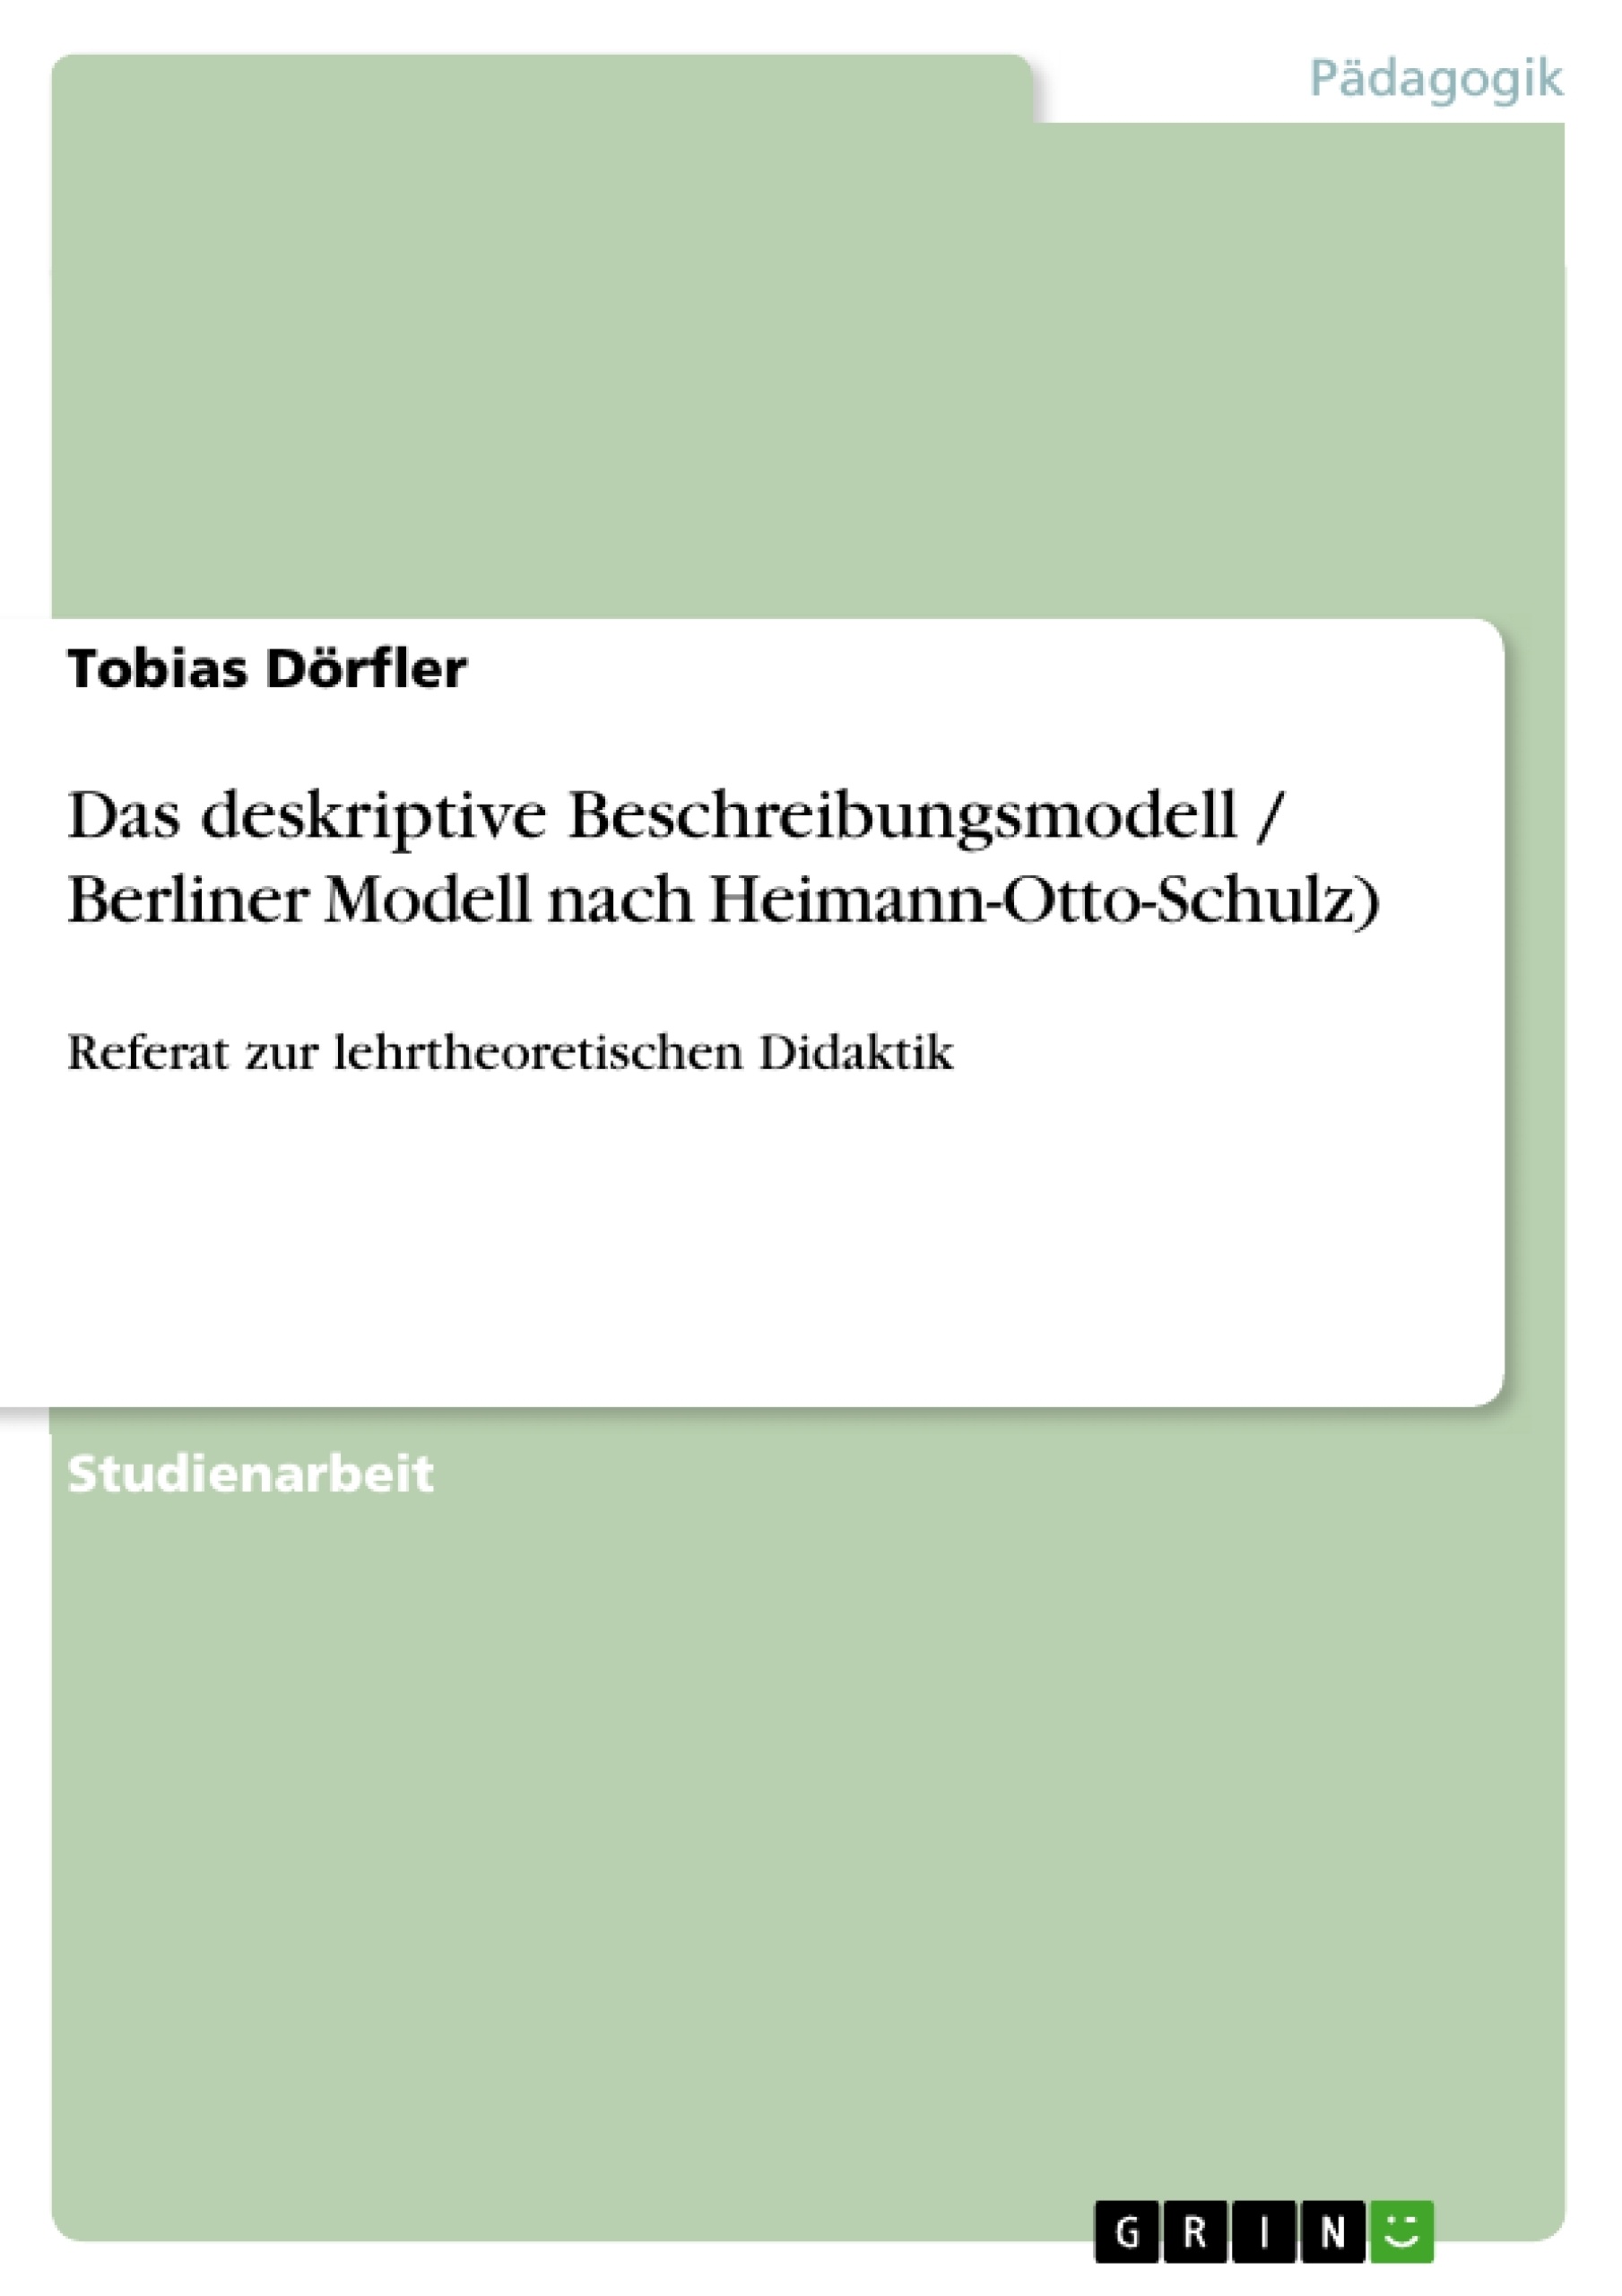 Title: Das deskriptive Beschreibungsmodell / Berliner Modell nach Heimann-Otto-Schulz)